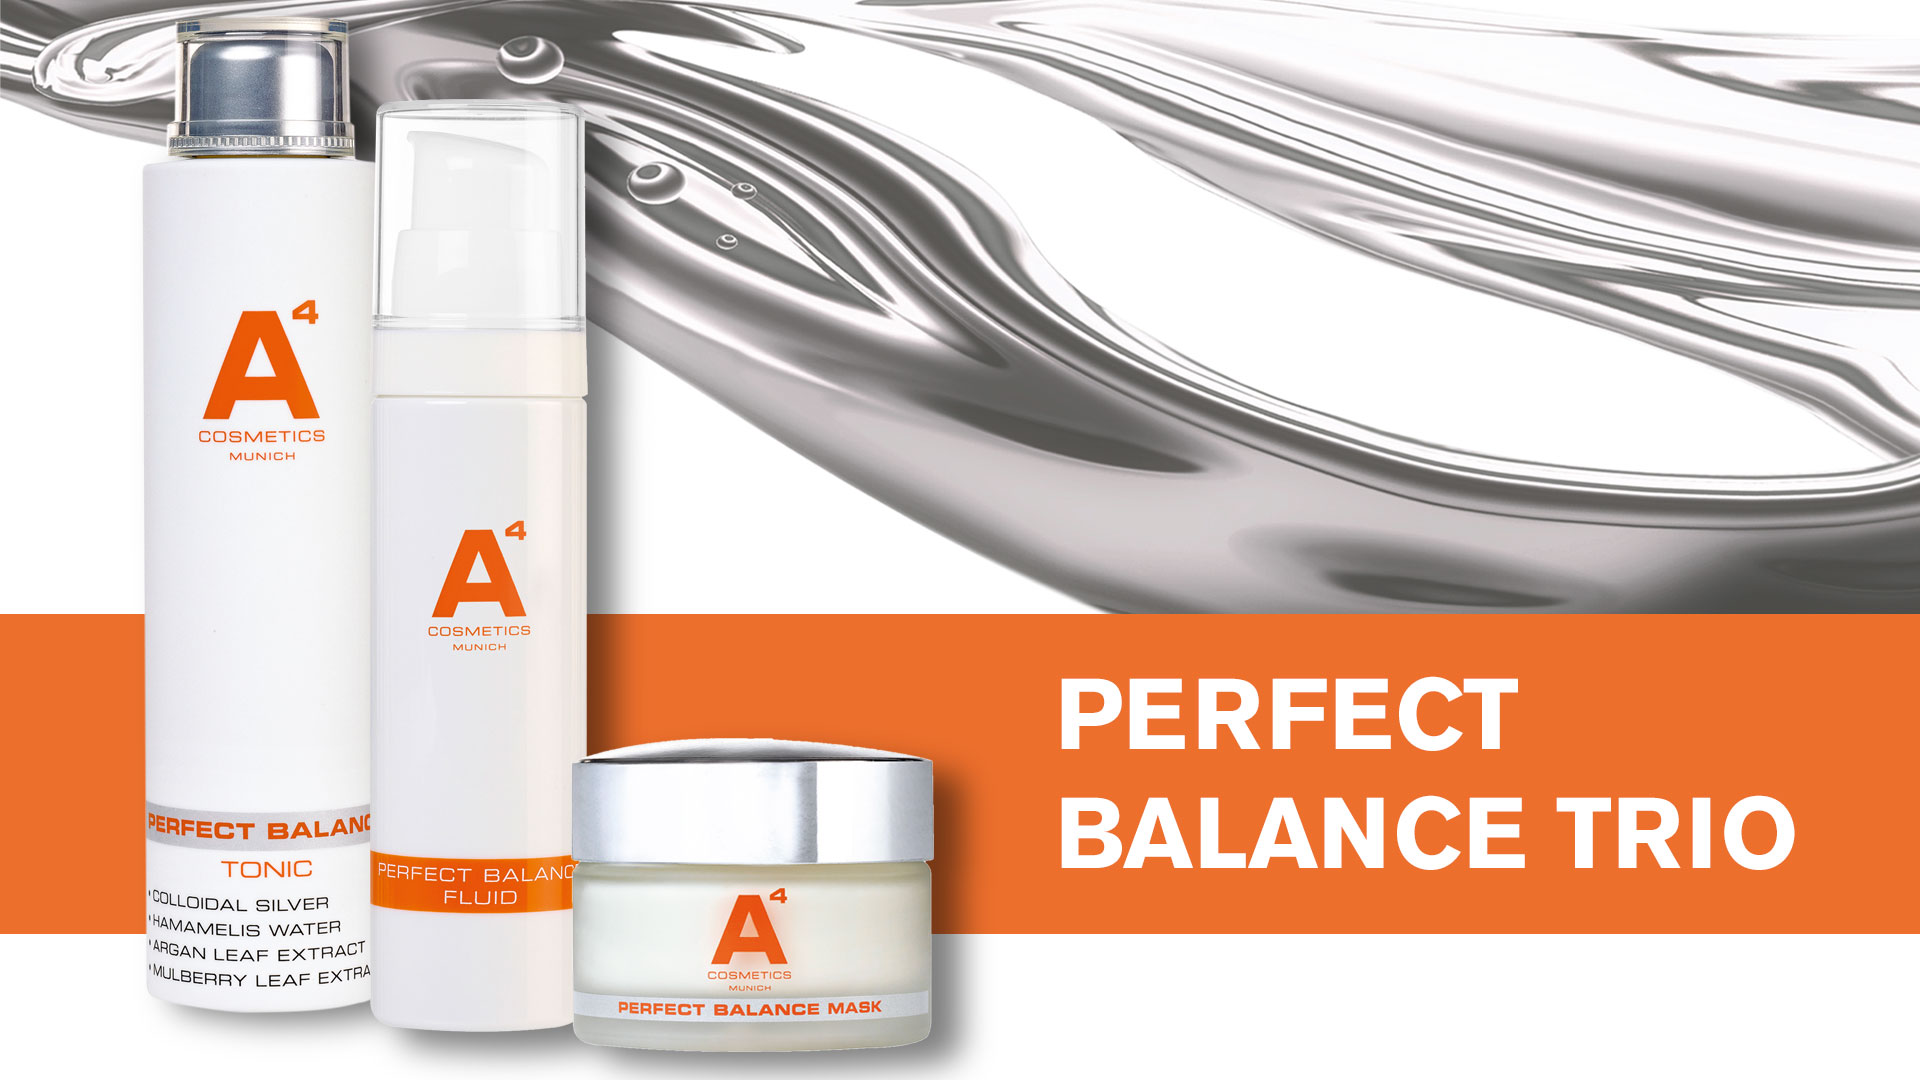 a4-cosmetics-perfct-balance